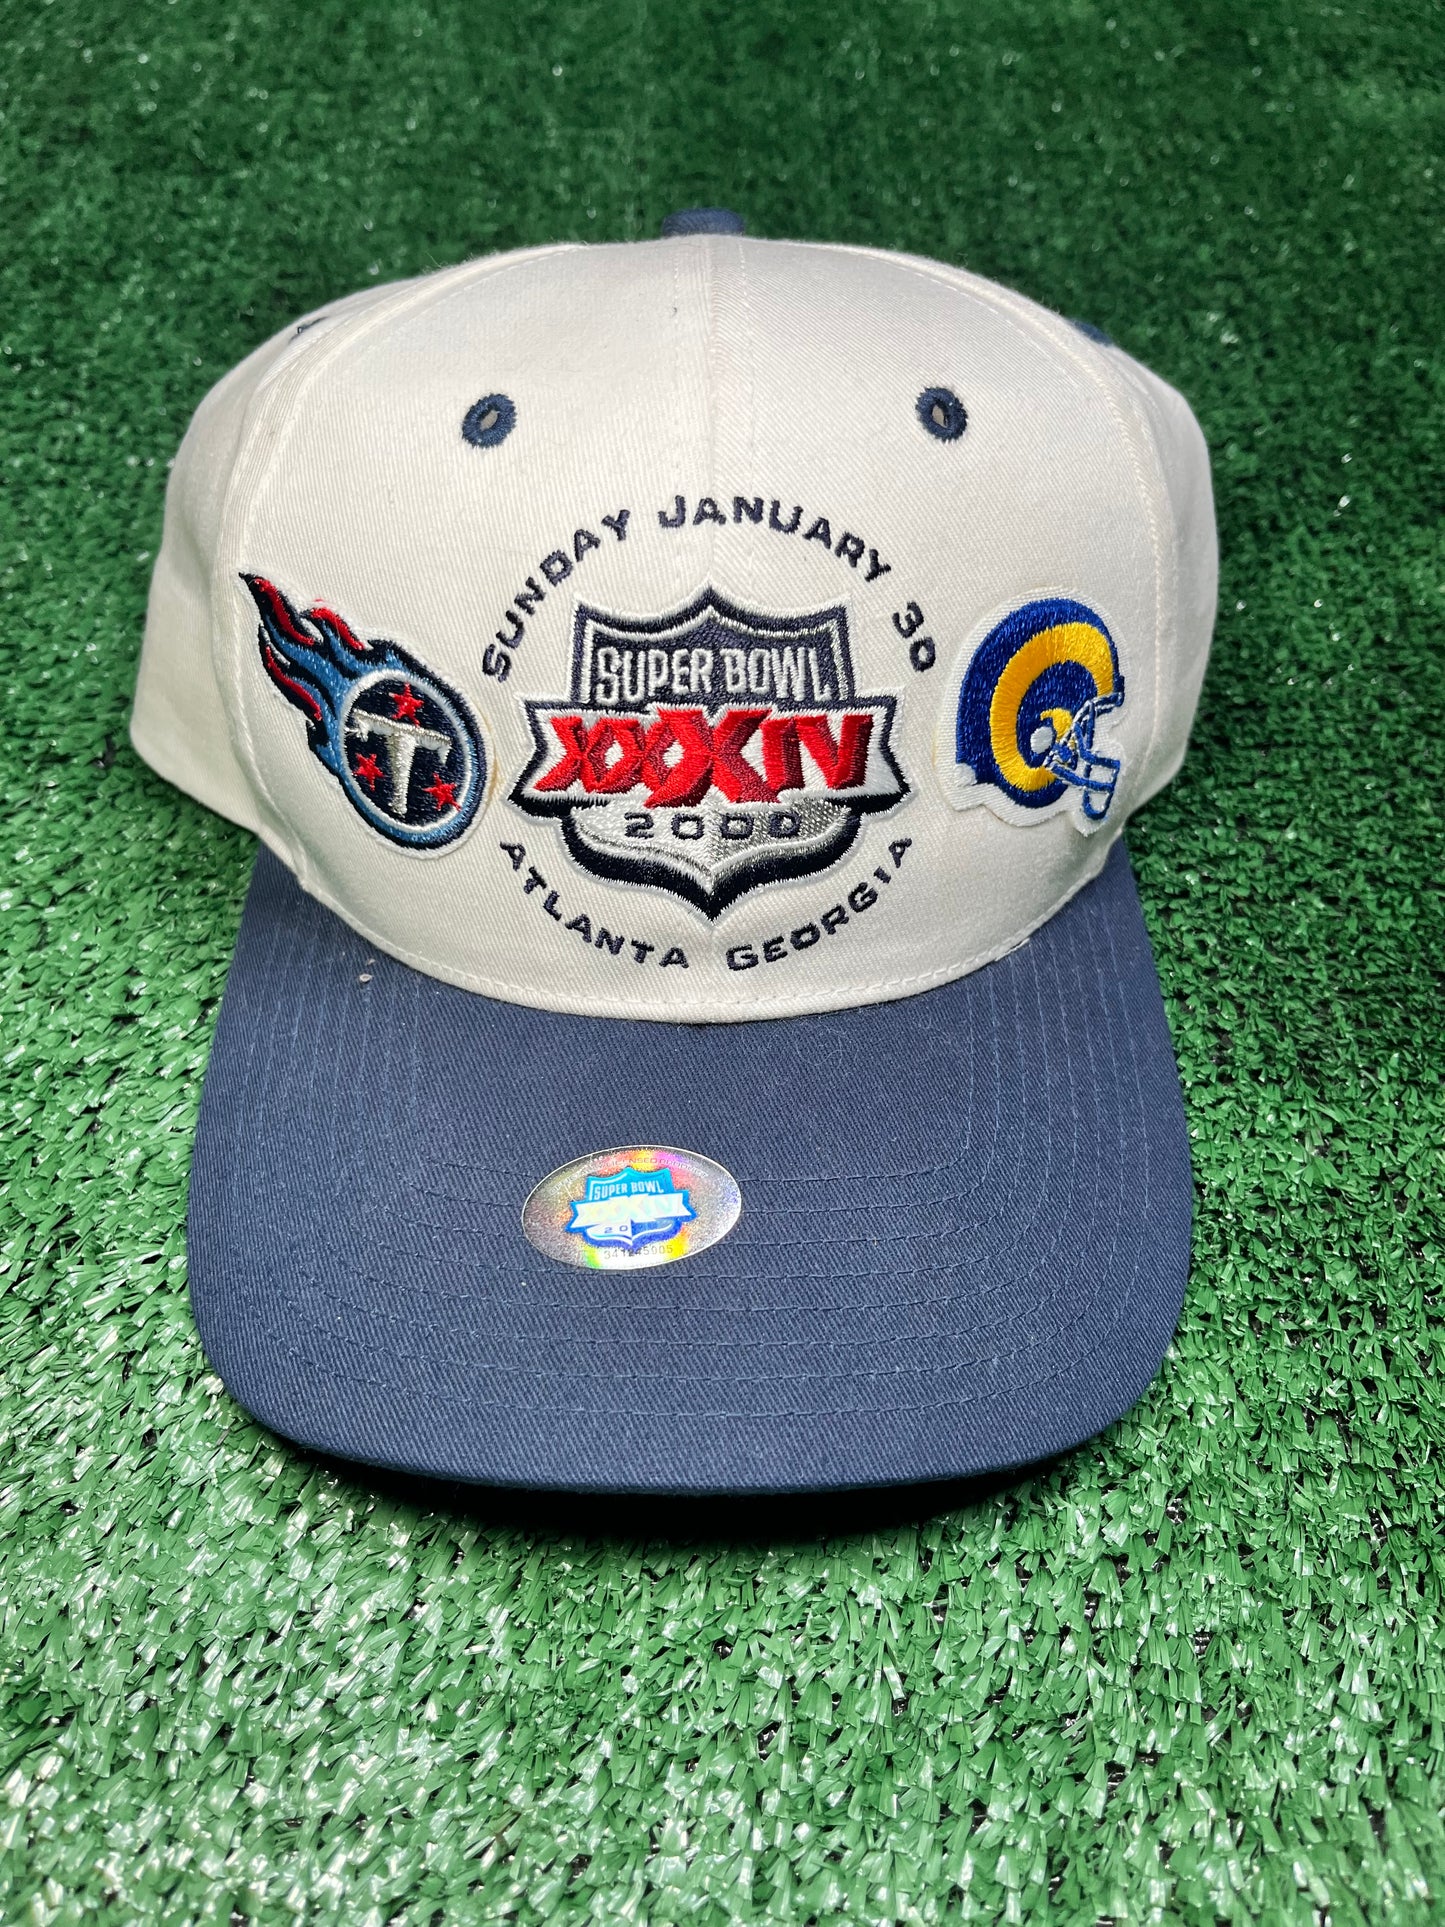 2000 Super Bowl Hat